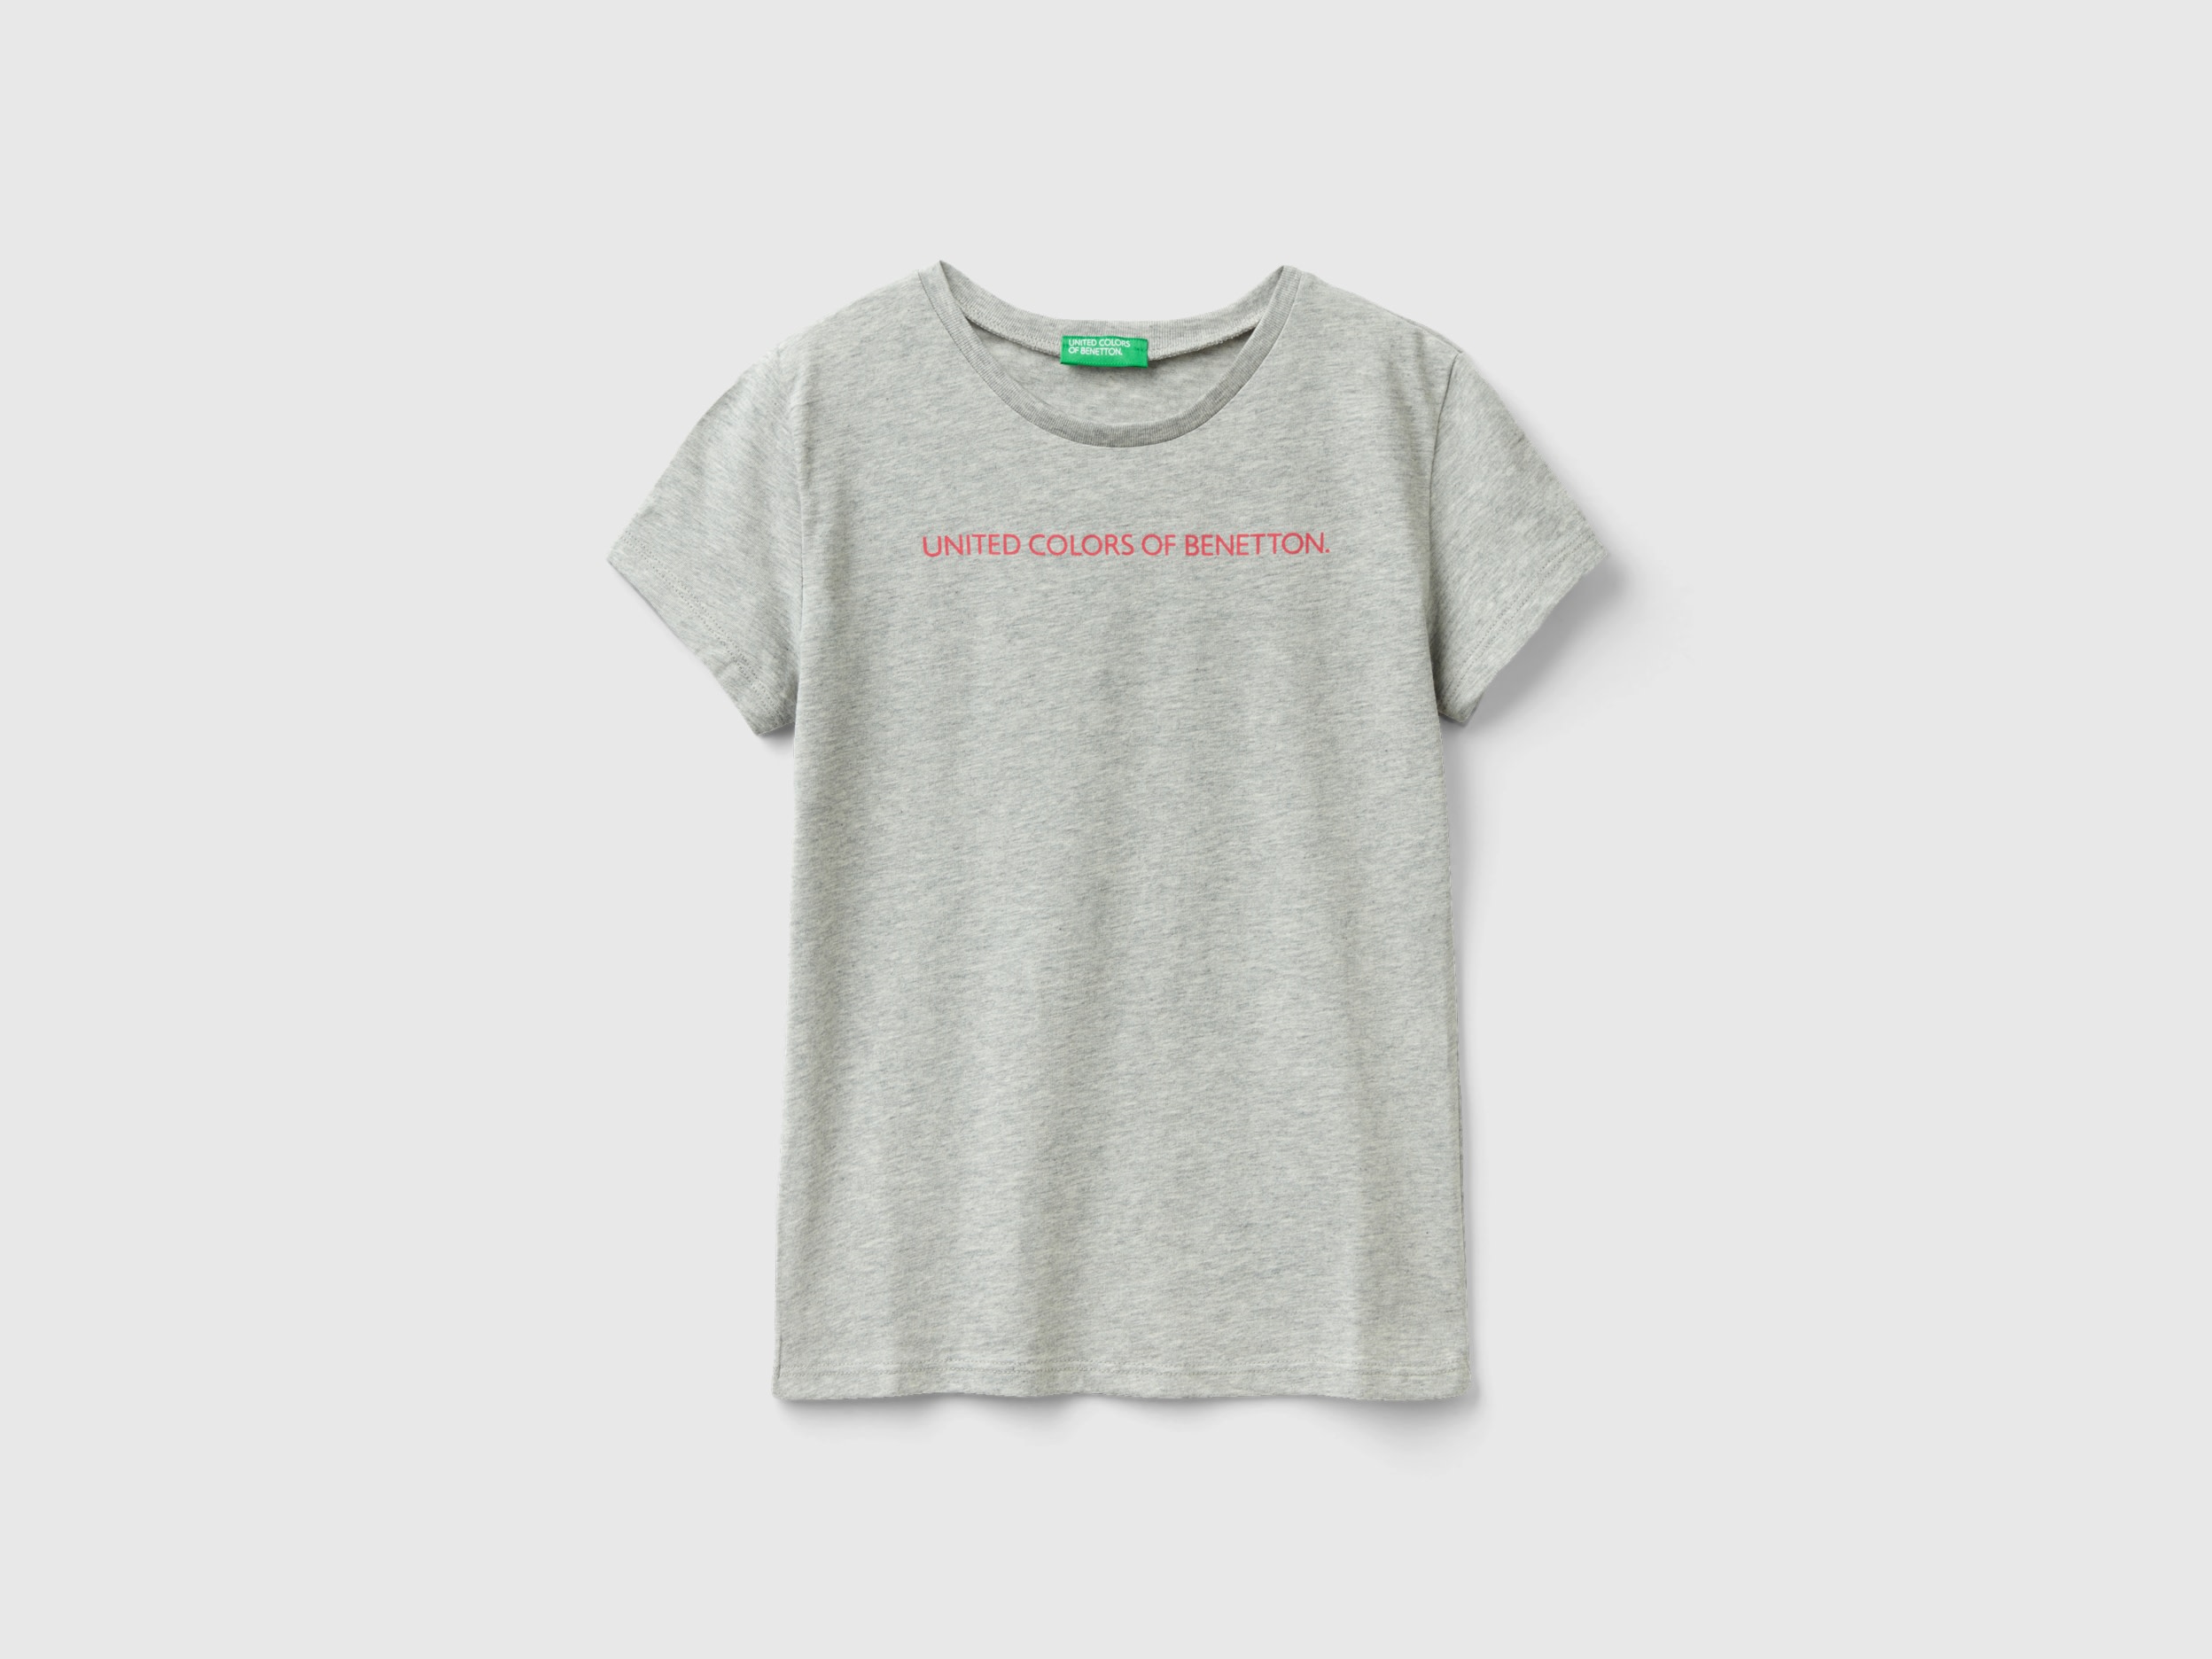 Benetton, 100% Cotton T-shirt With Logo, size 2XL, Light Gray, Kids